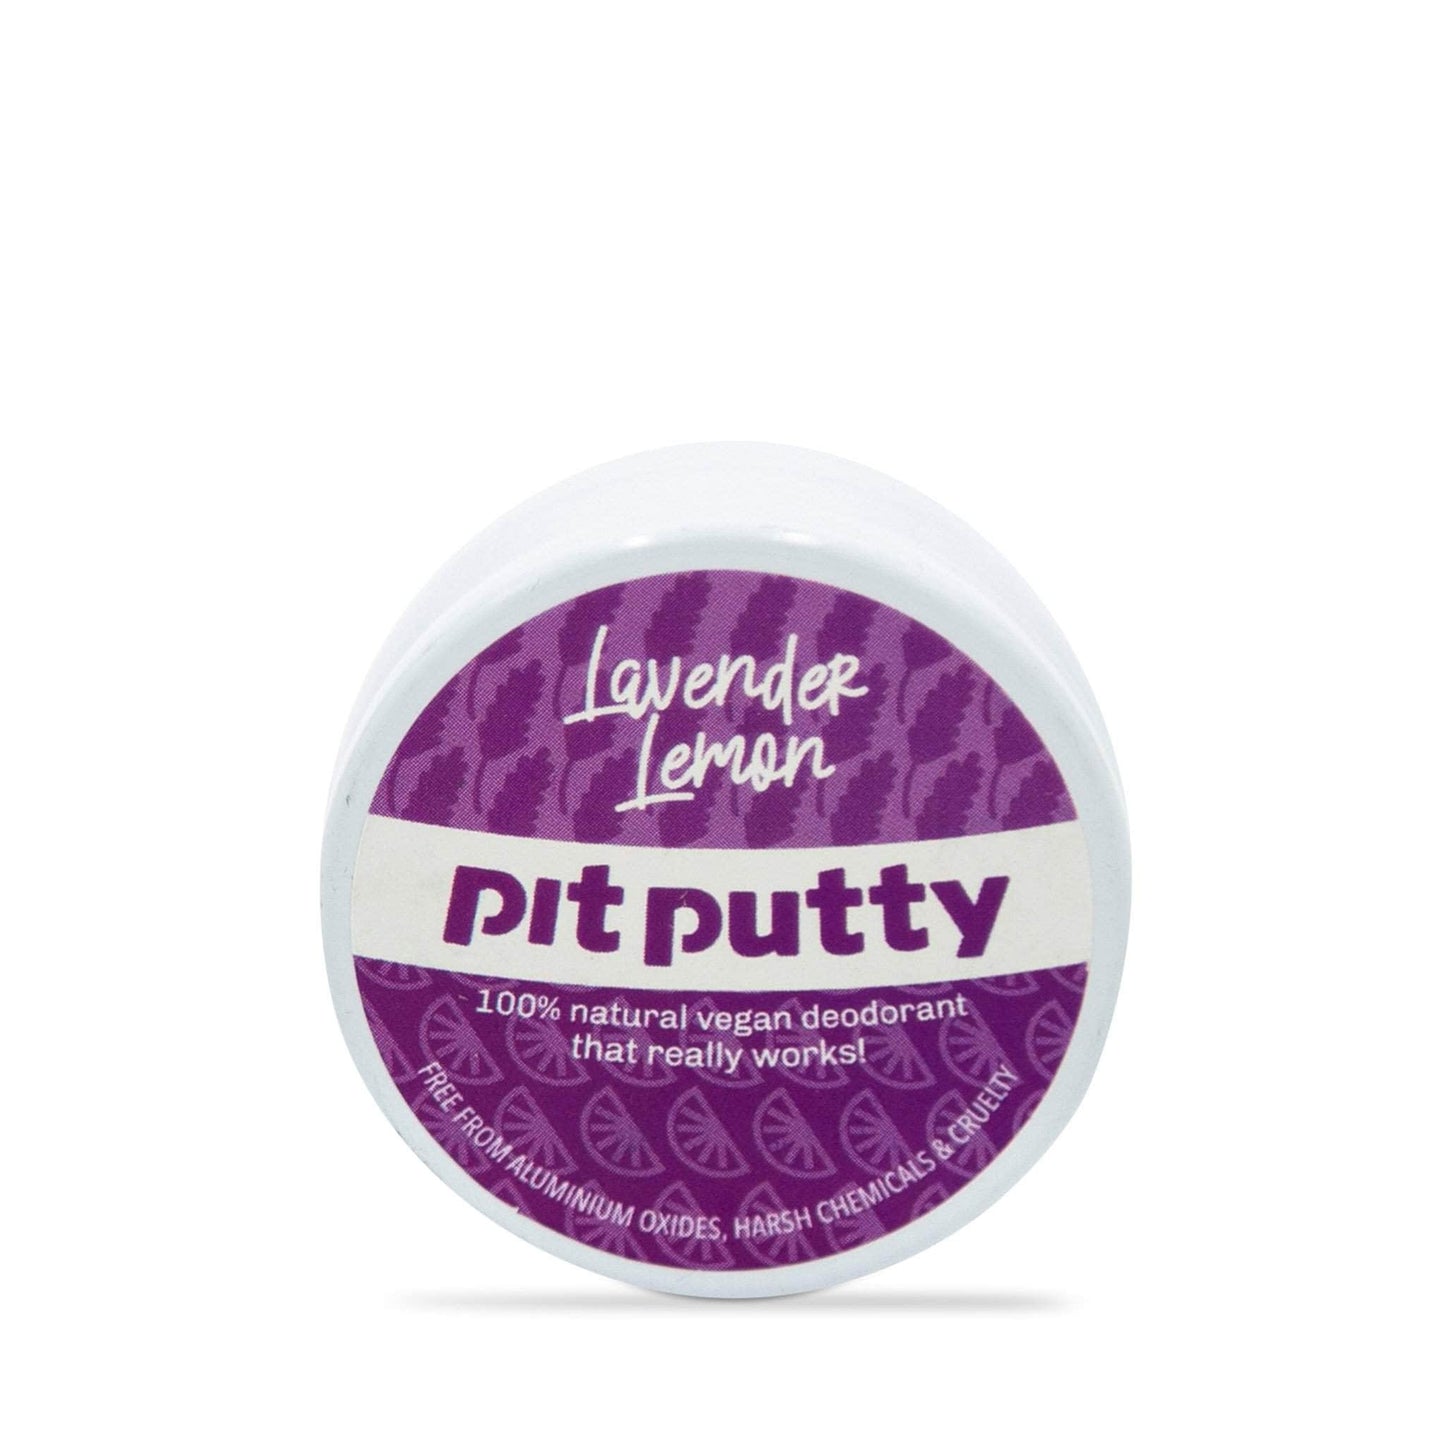 Pit Putty Deodorant Pit Putty Deodorant - Lavender & Lemon - Tester Mini 15gm